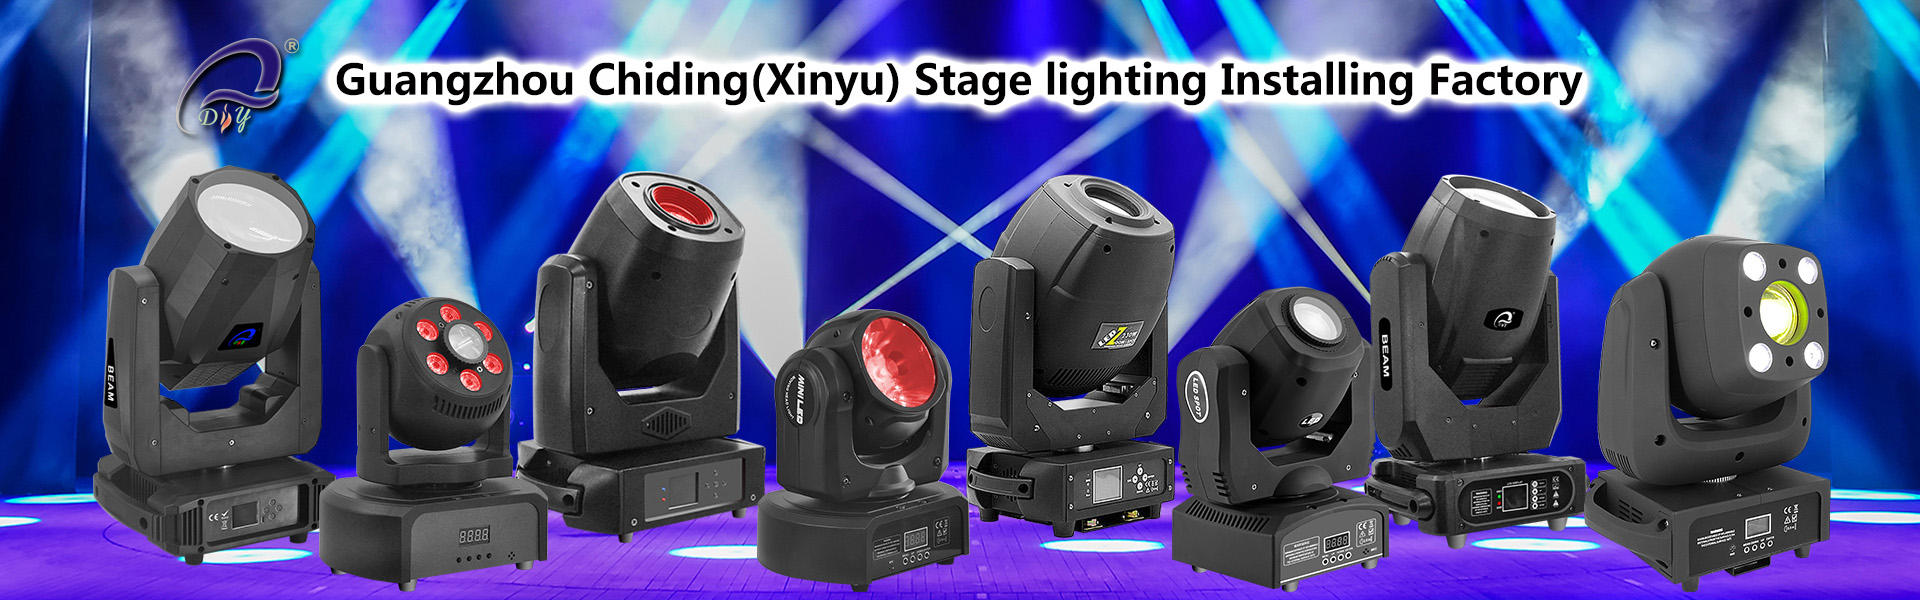 LED 、 照明 ム ー,guangzhou chiding stage lighting co ltd